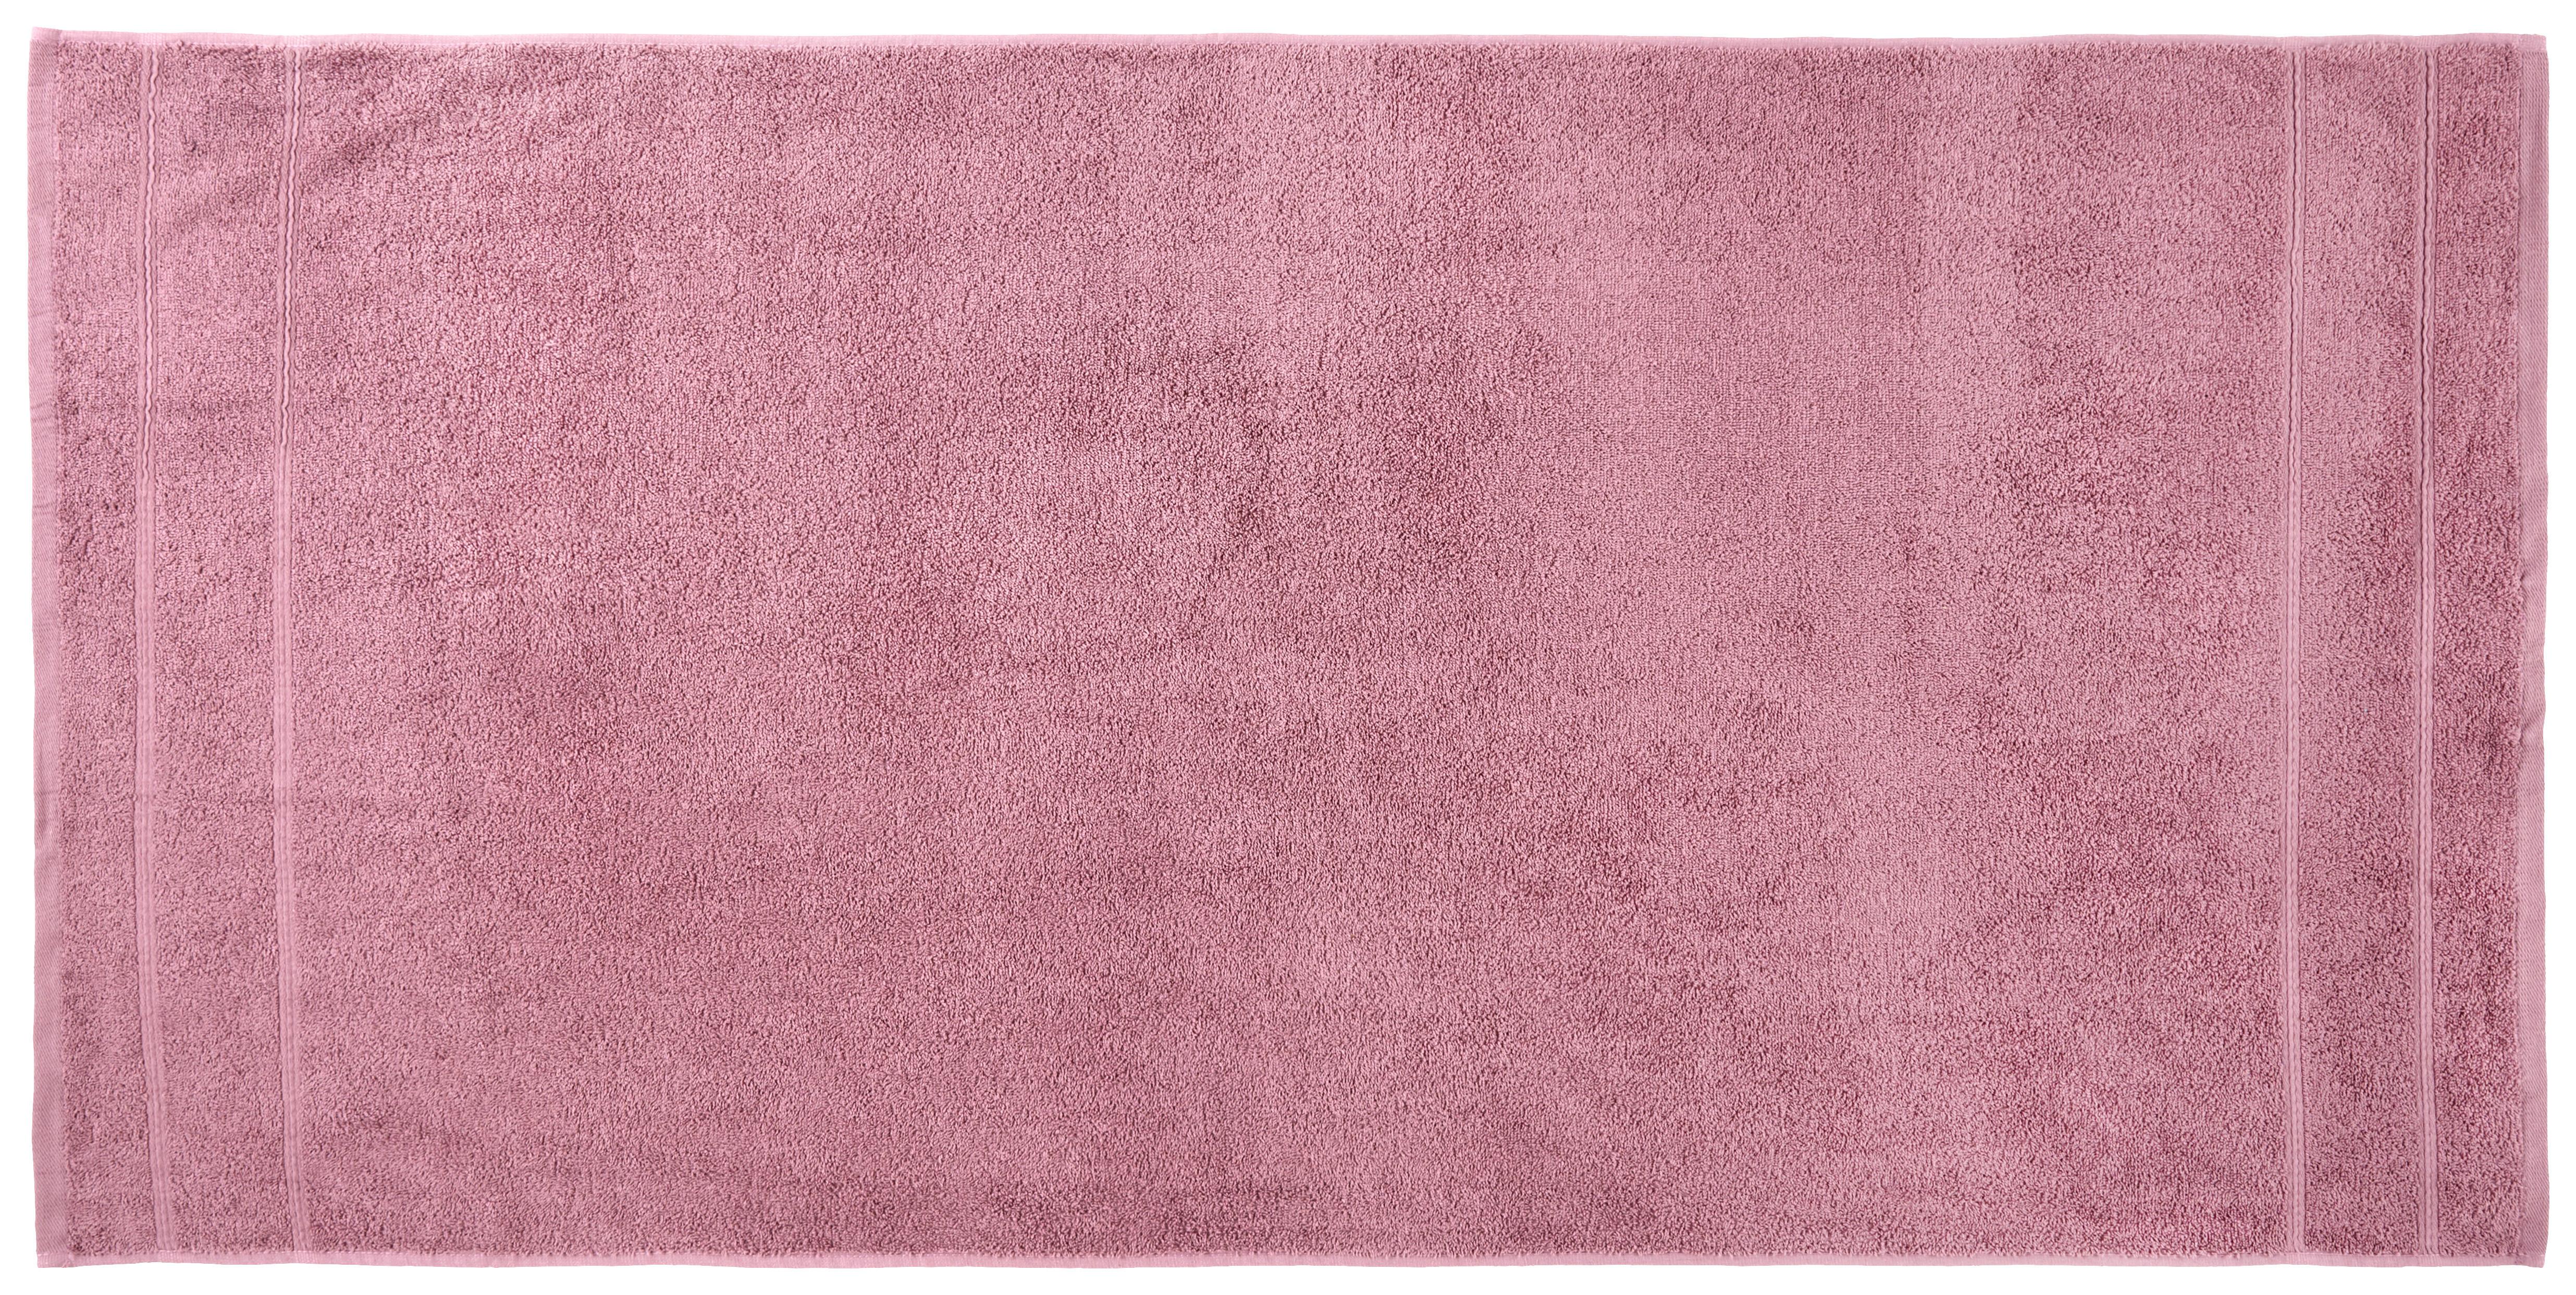 Duschtuch Melanie in Mauve ca. 70x140cm - Mauve, Textil (70/140cm) - Modern Living